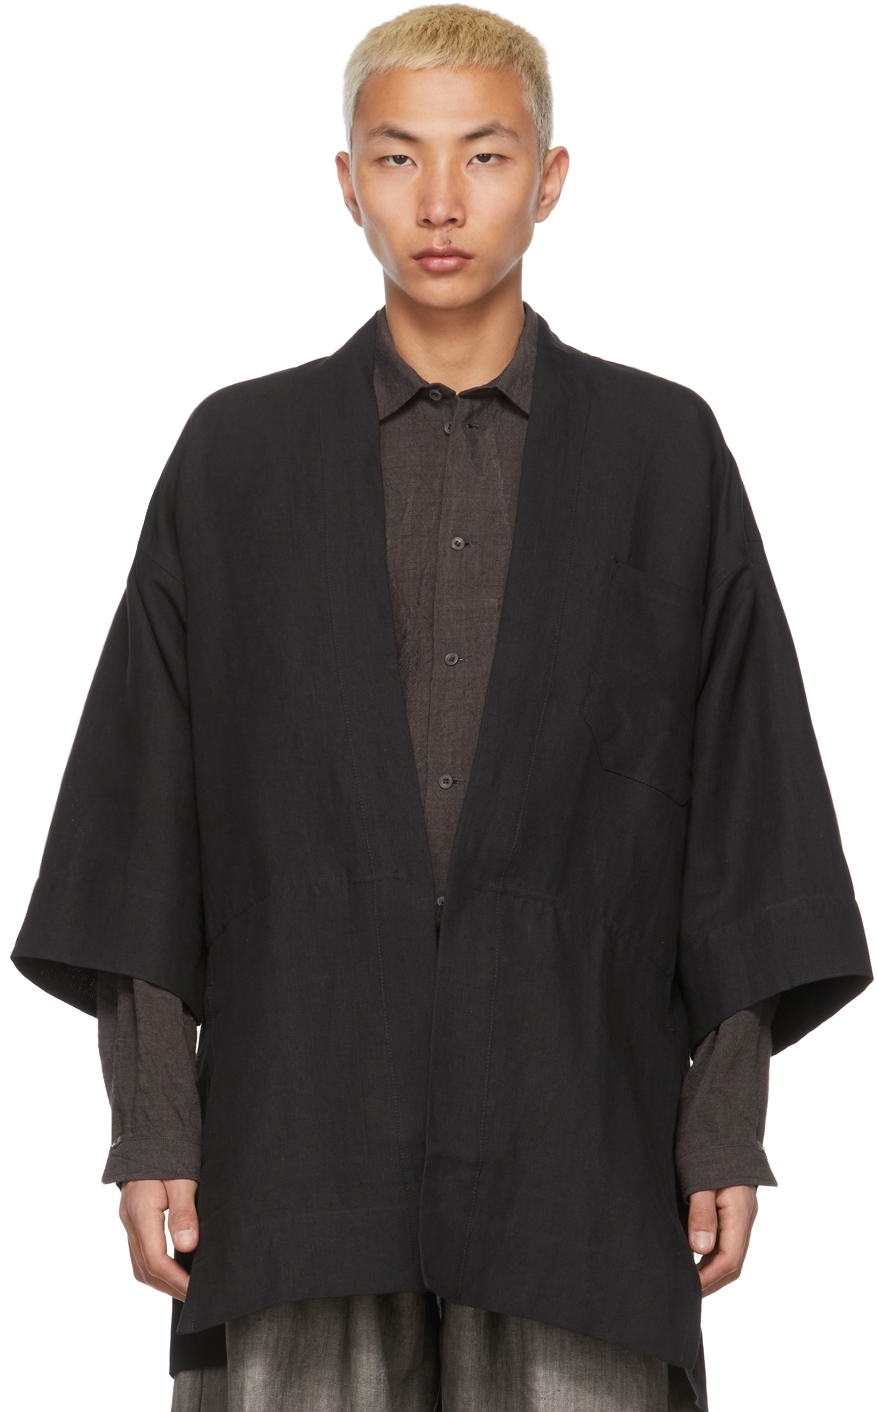 Black #10 Kimono Cardigan by Jan-Jan Van Essche on Sale